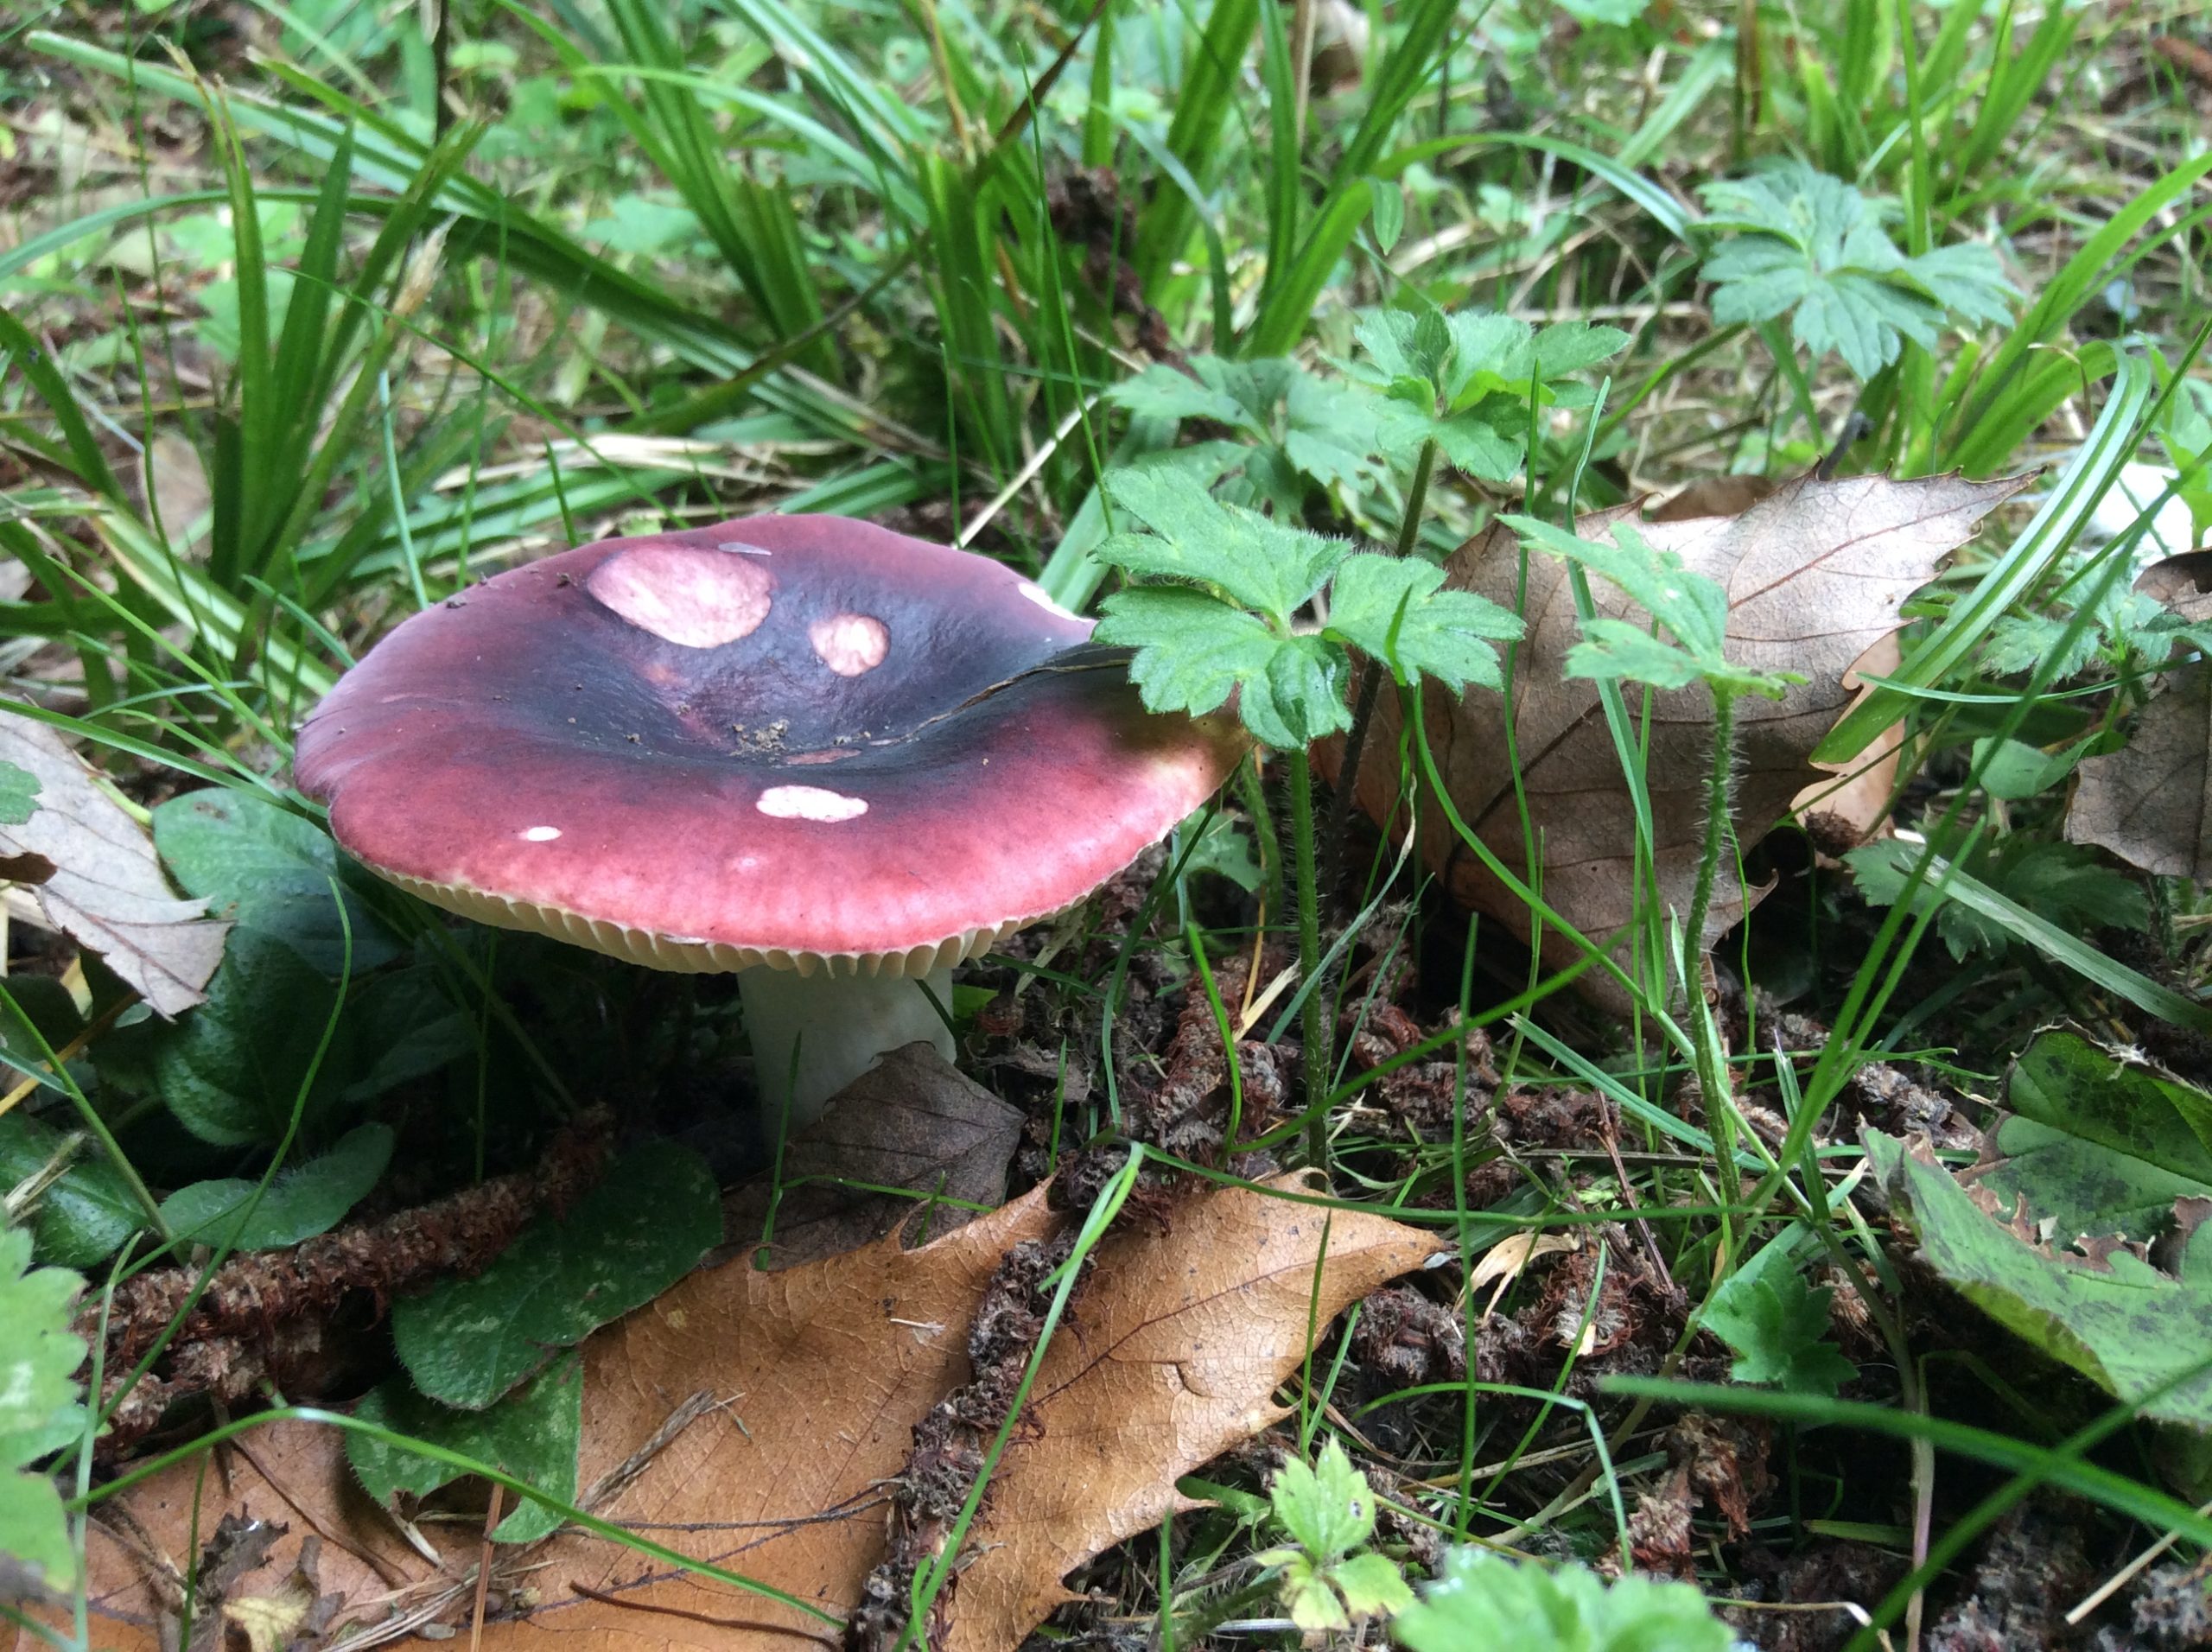 Red mushroom in grassland